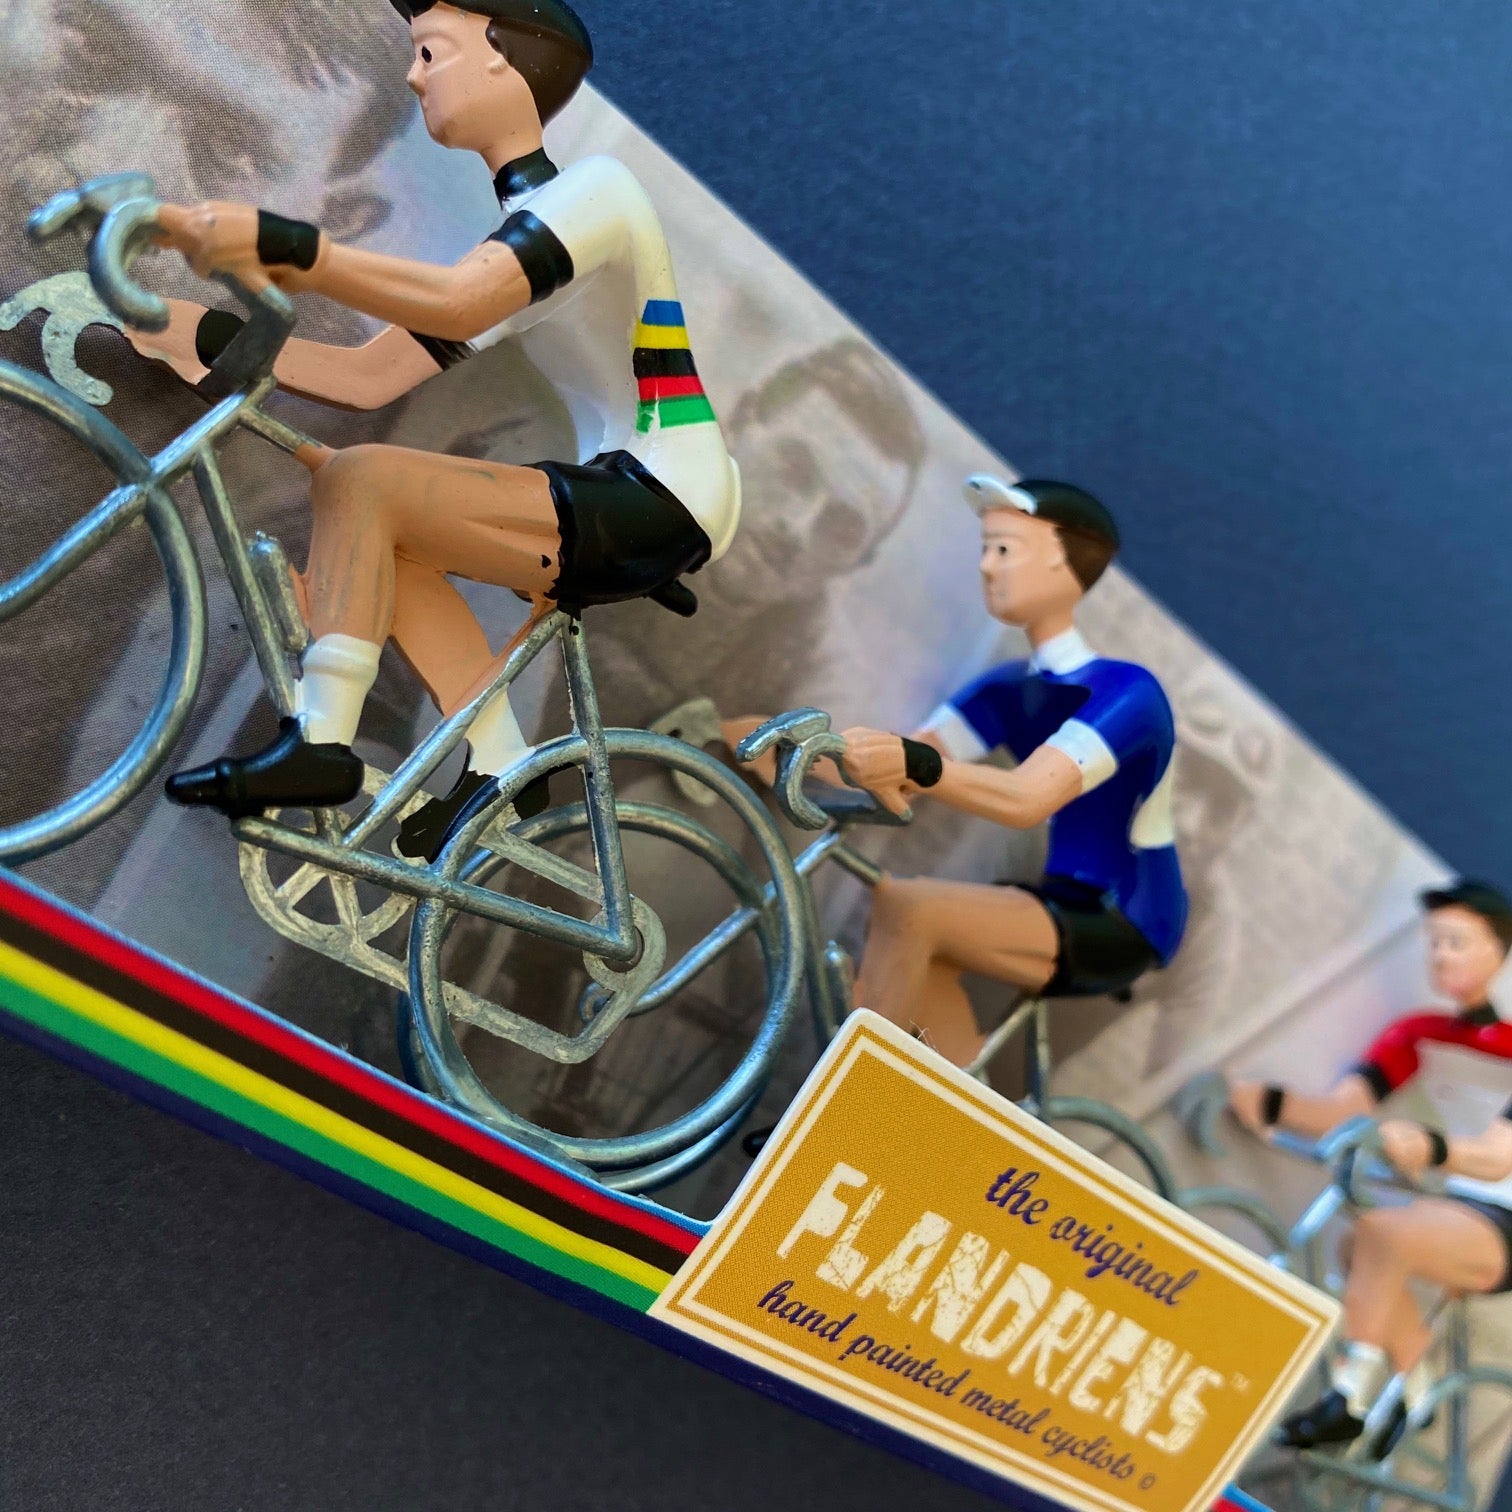 FLANDRIENS - Hand Painted Metal Cyclists - Eddy Merckx